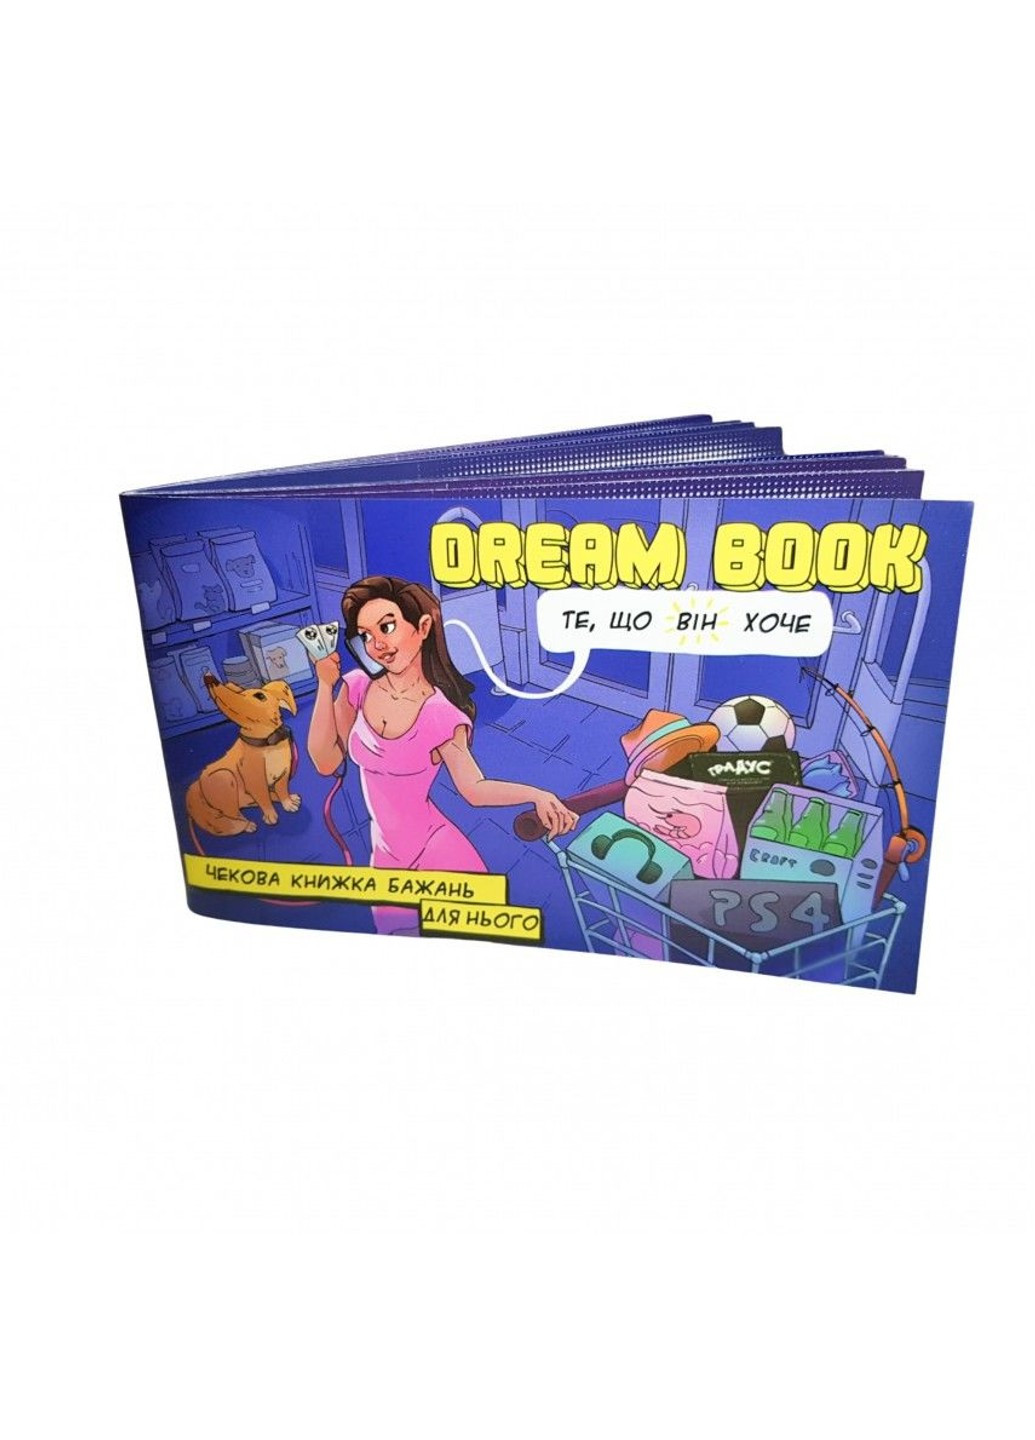 Чекова книжка бажань для него "Dream book" Bombat Game (252607139)